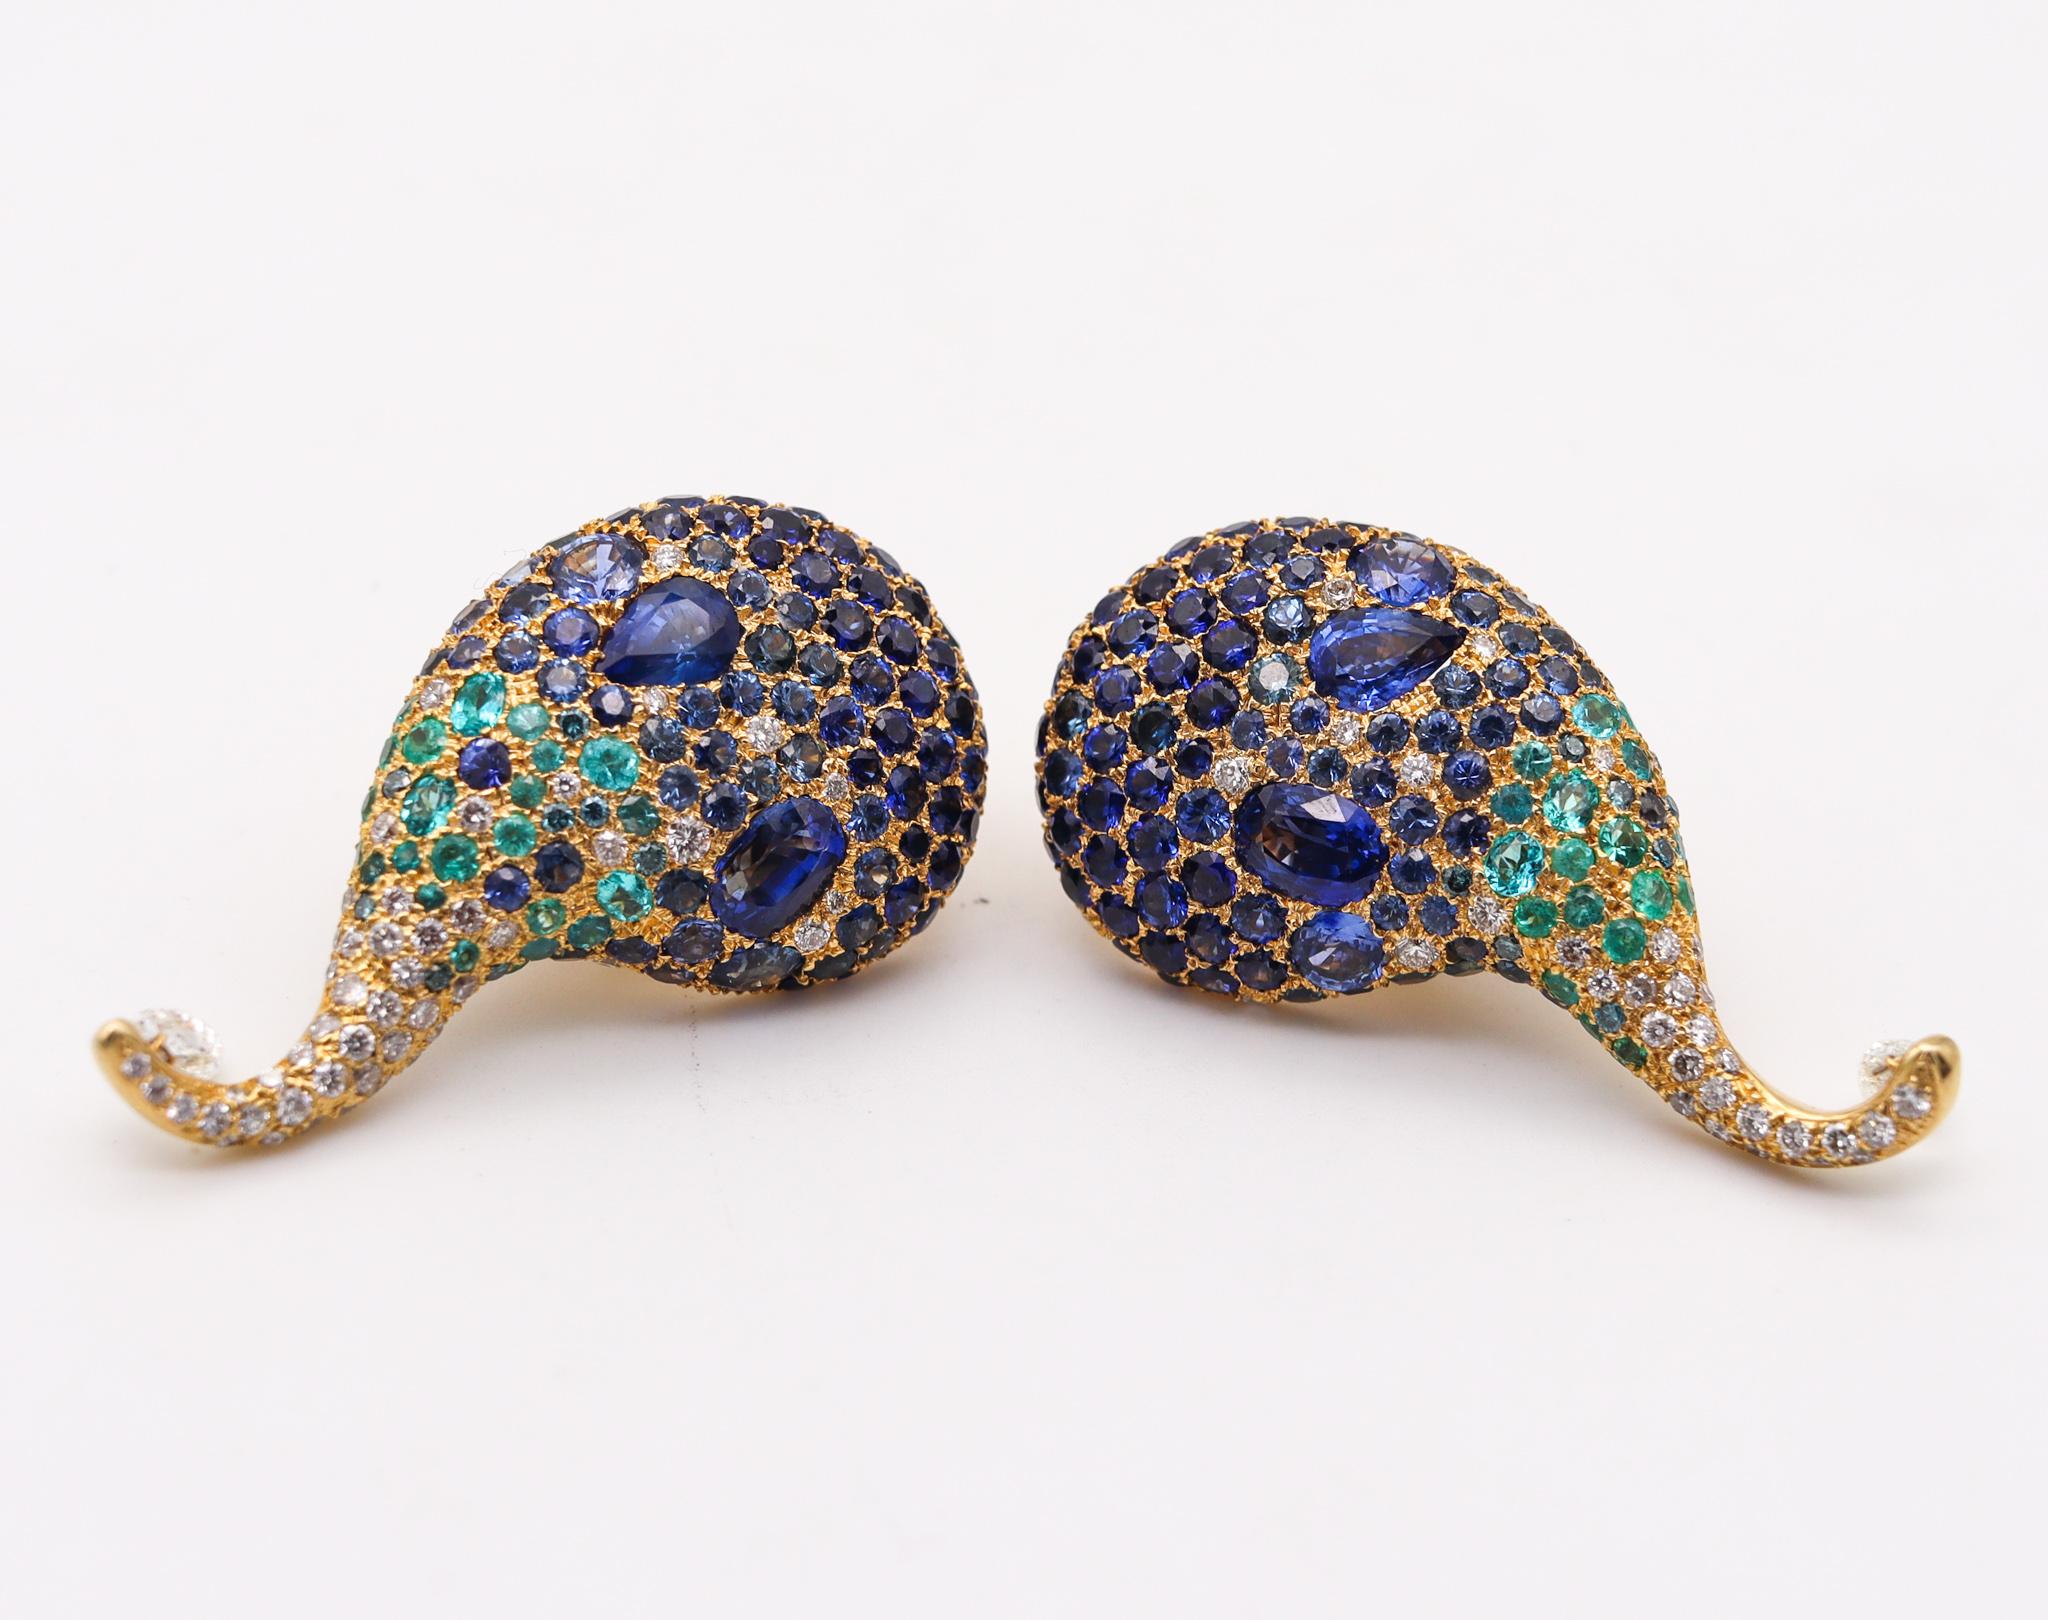 Briolette Cut Michele Della Valle Clips Earrings 18kt with 26.24 Ctw Paraiba Tourm & Sapphires For Sale